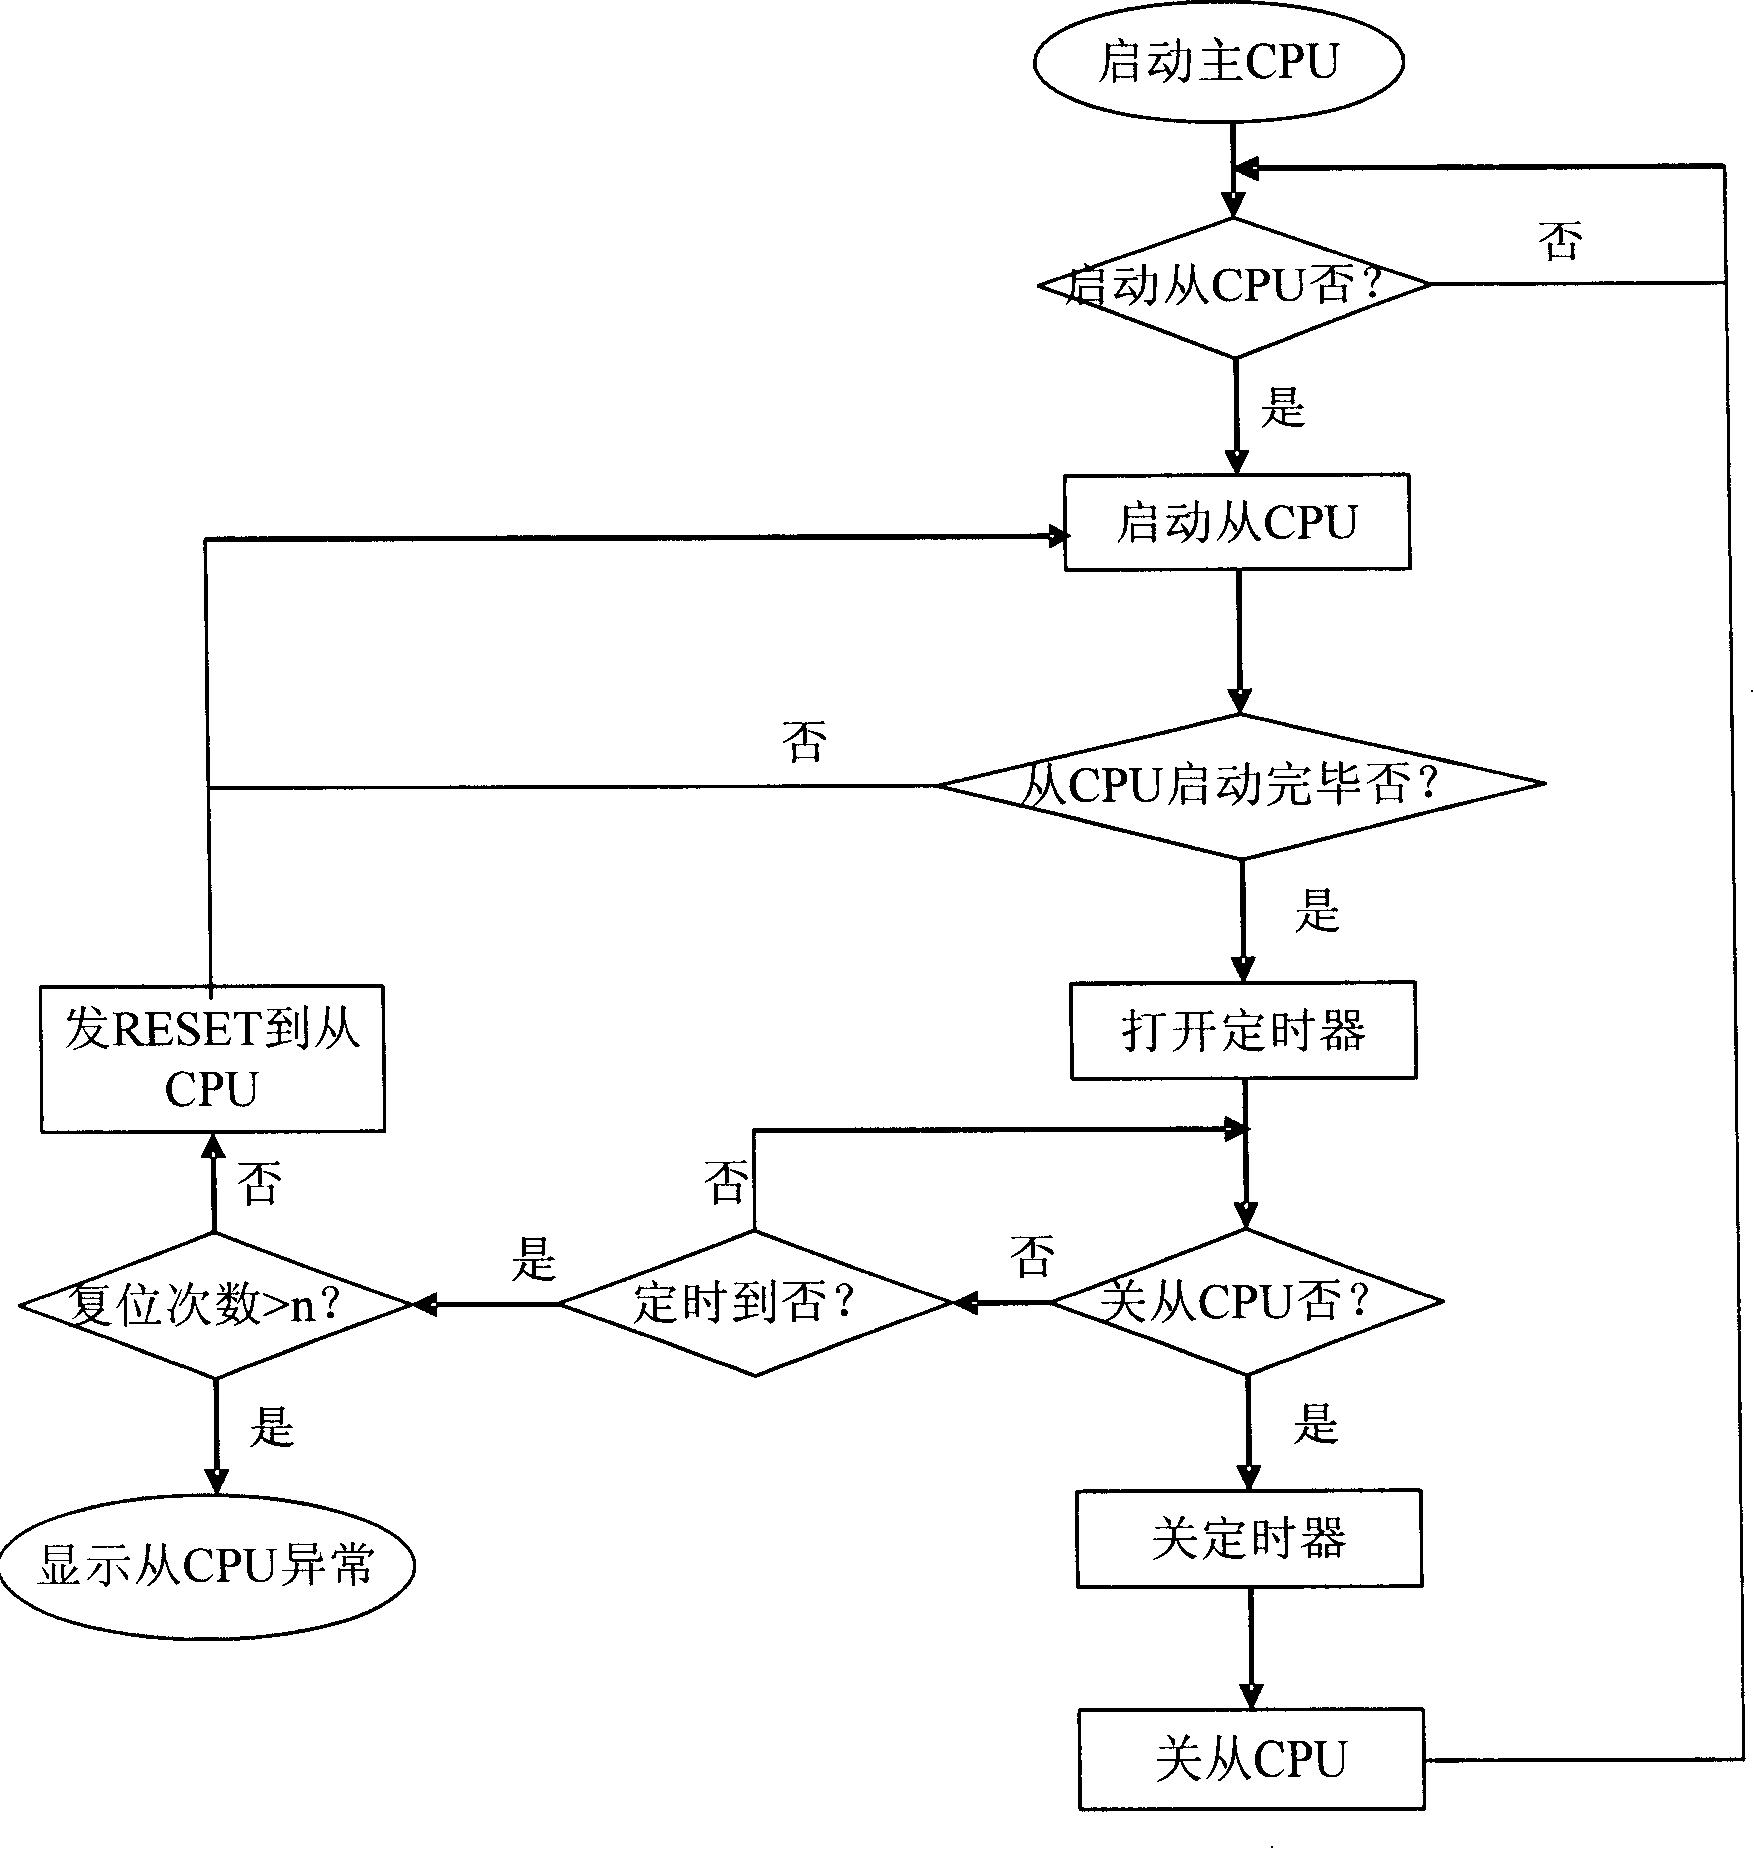 Method for dual-processor mobile terminal to work status of process slave processor